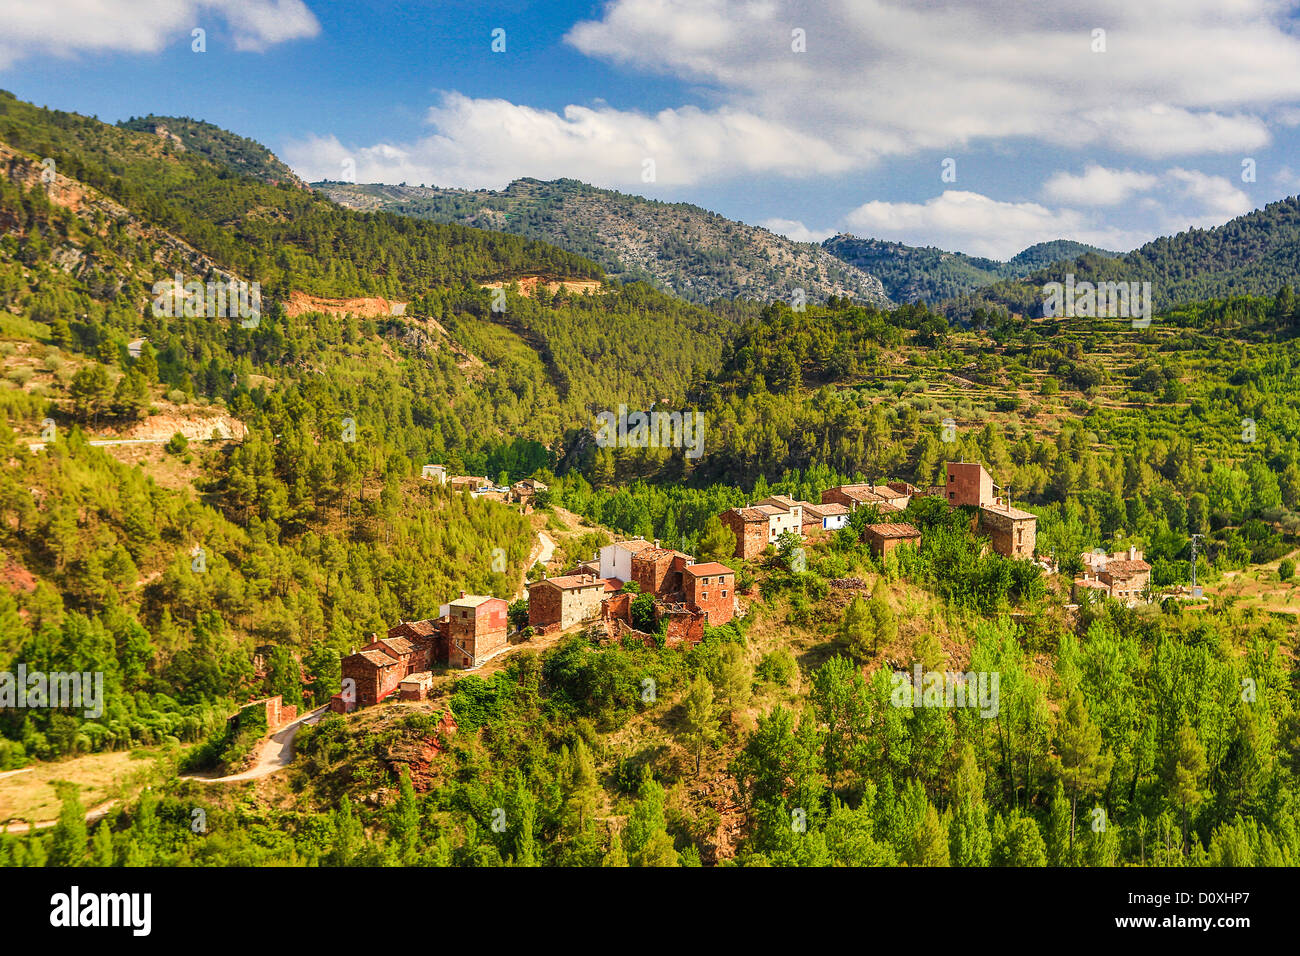 Spain, Europe, Aragon, Teruel, Province, Maestrazgo, Puertomingalvo, Village, architecture, landscape, forest, mountains, natura Stock Photo